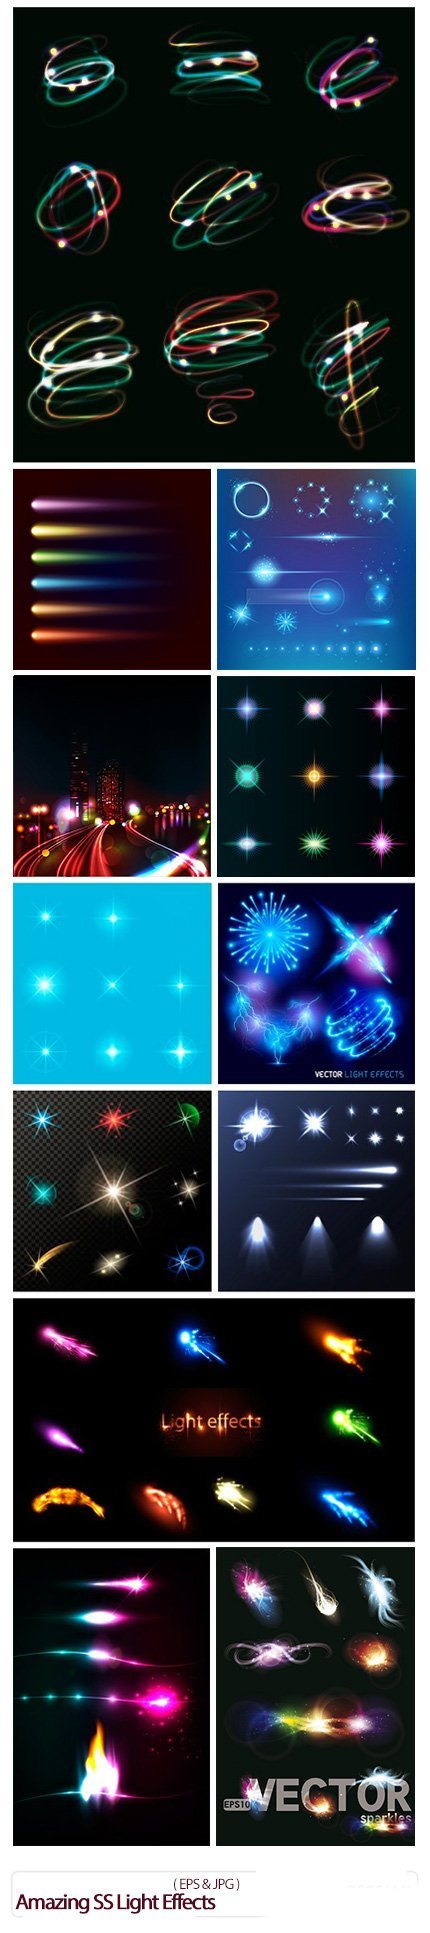 Amazing ShutterStock Light Effects